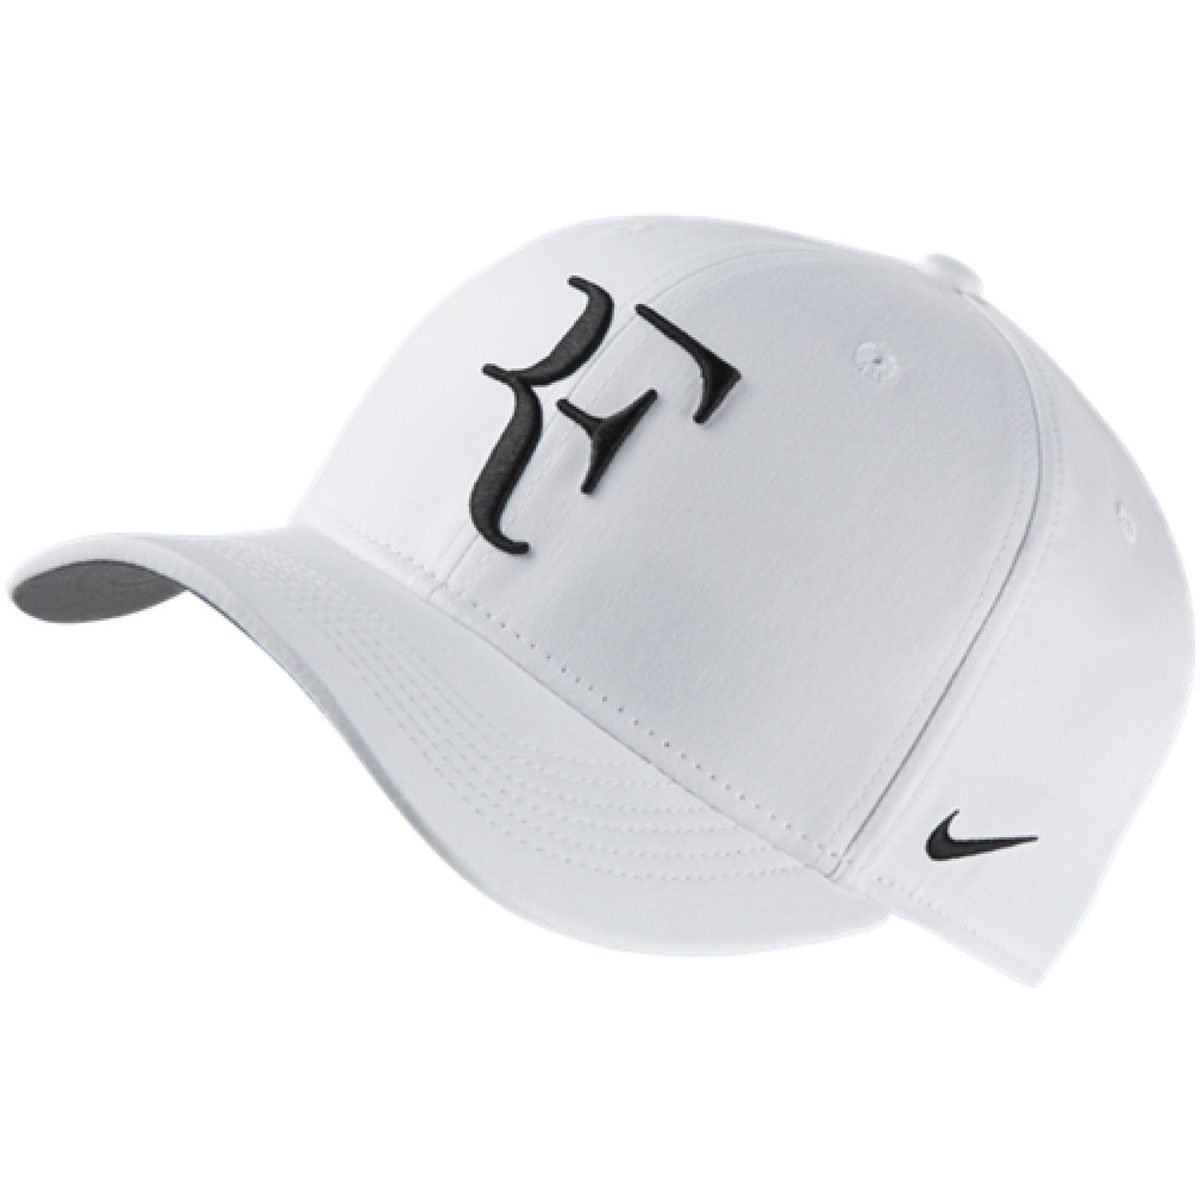 Buy Nike Roger Federer Hybrid Cap (White) Online at Lowest Price in India